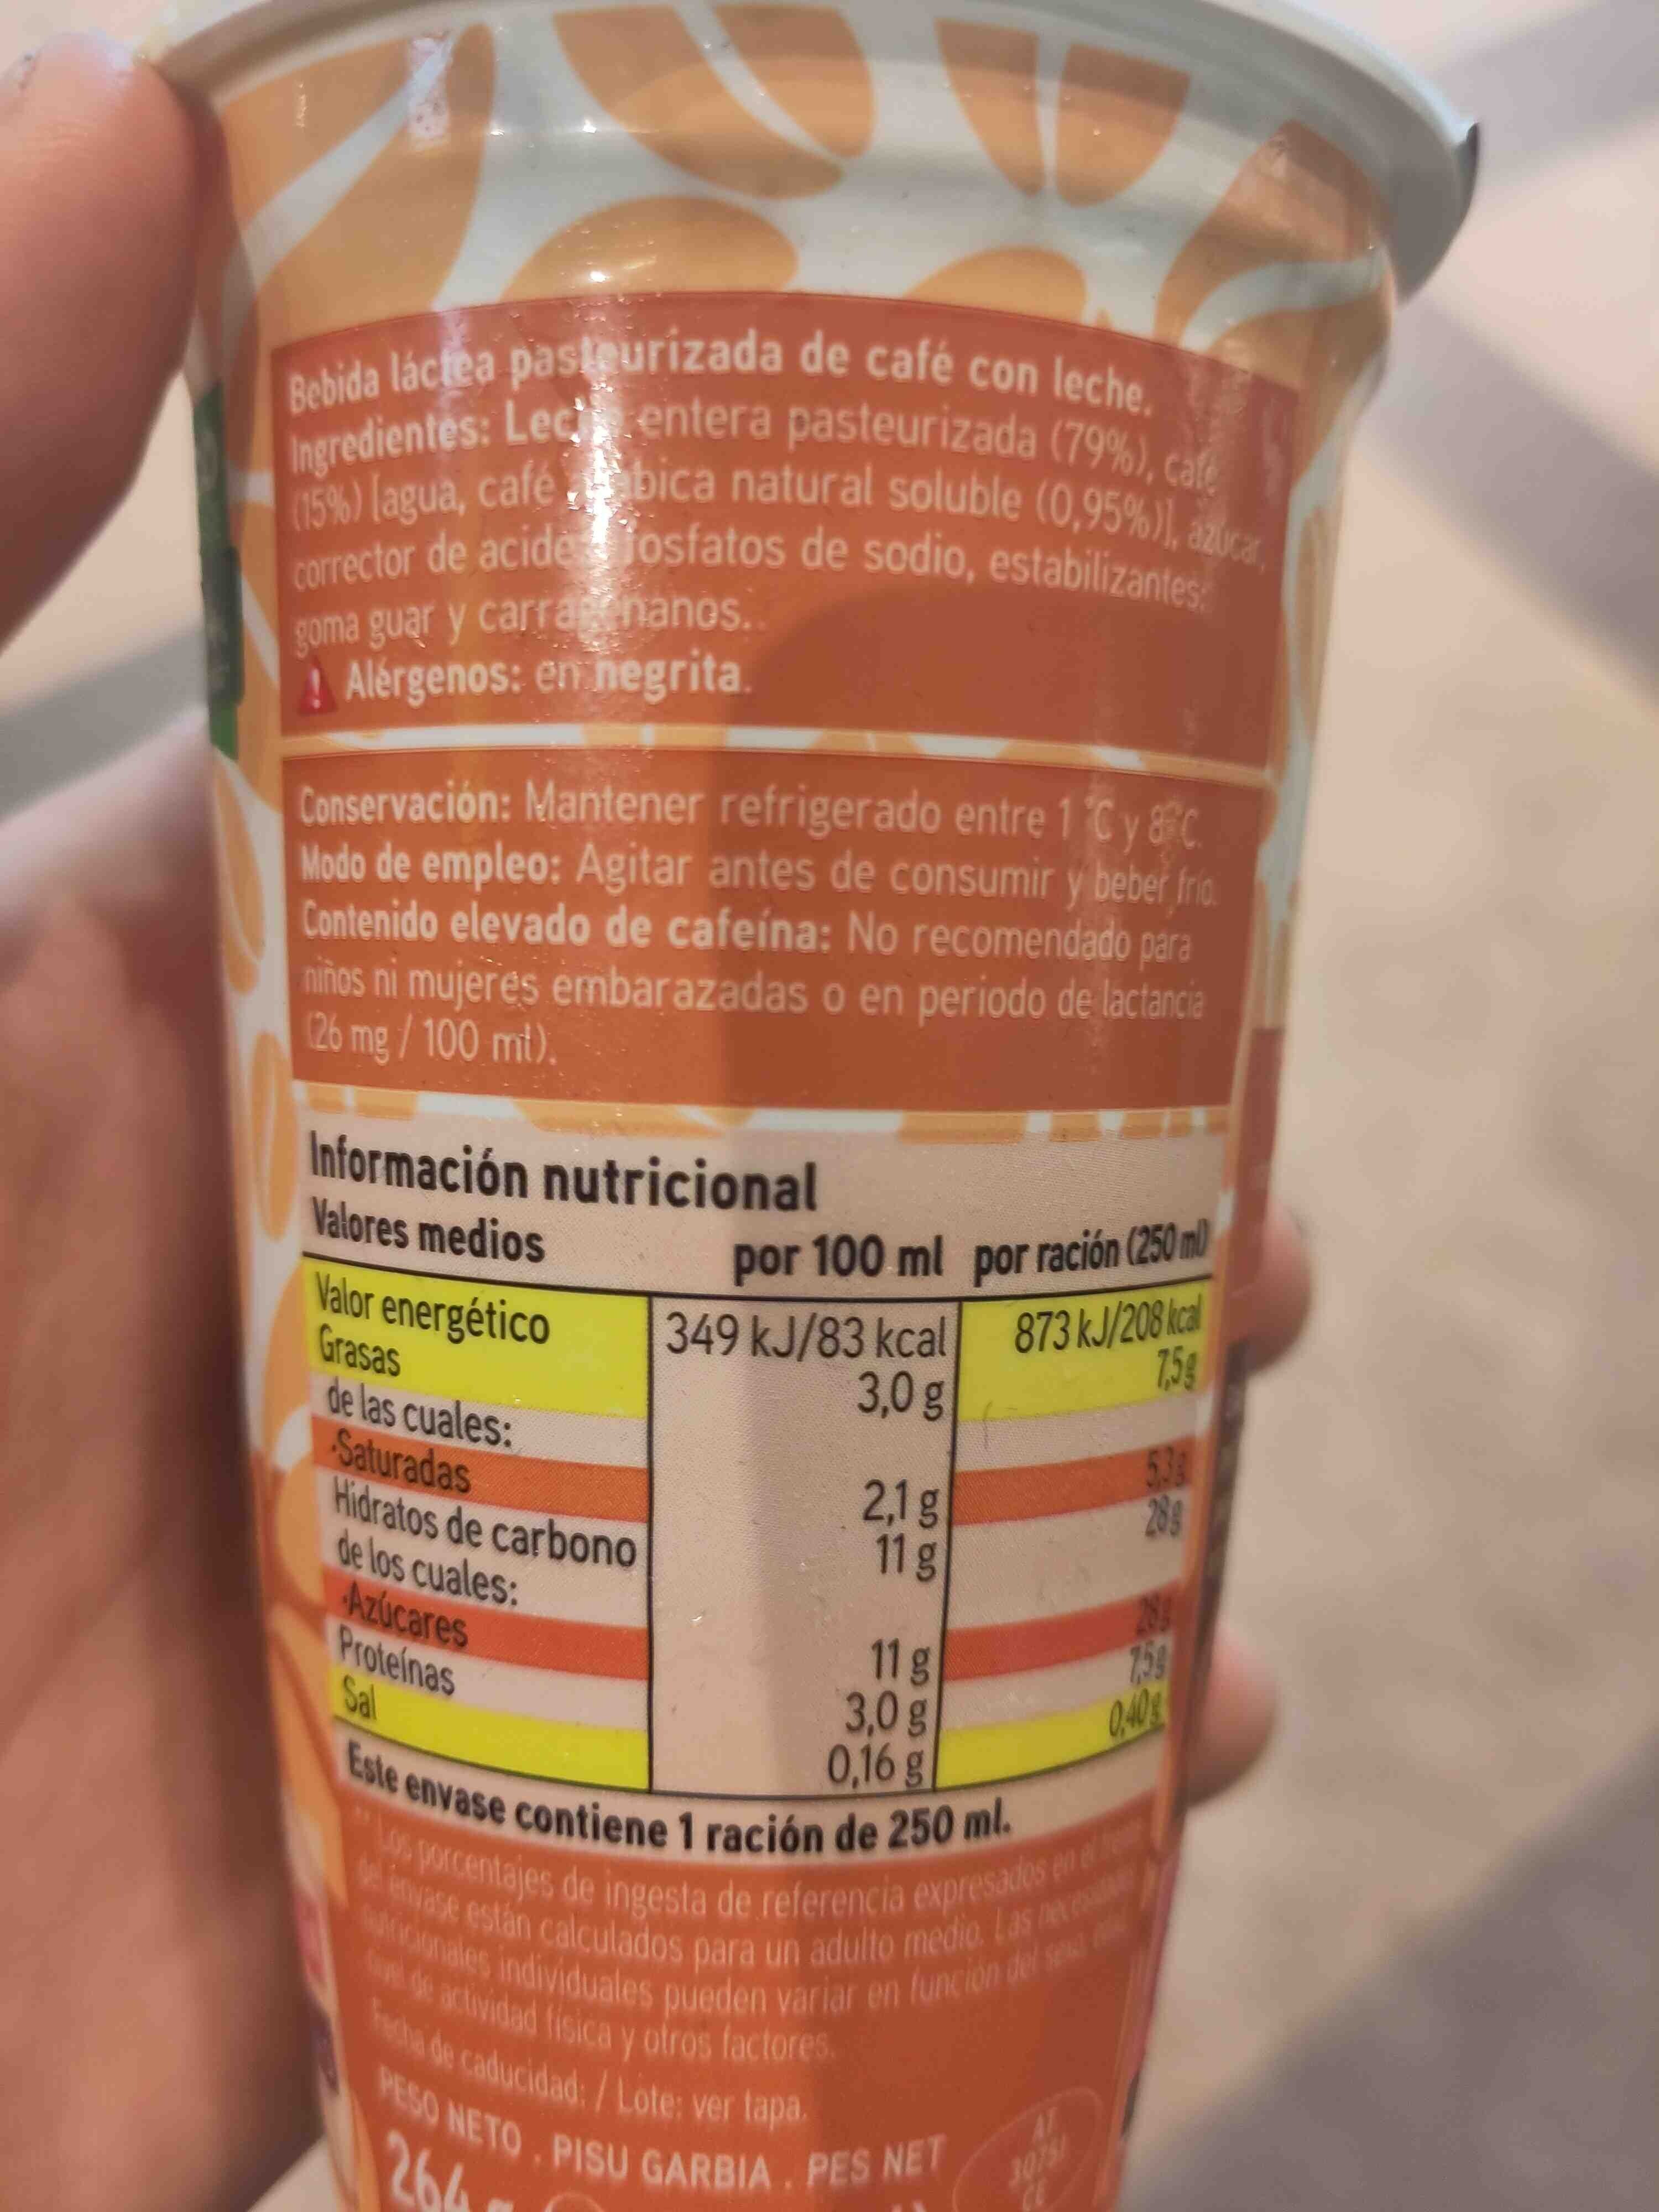 Latte Machiatto 100% Arabica - Ingredientes